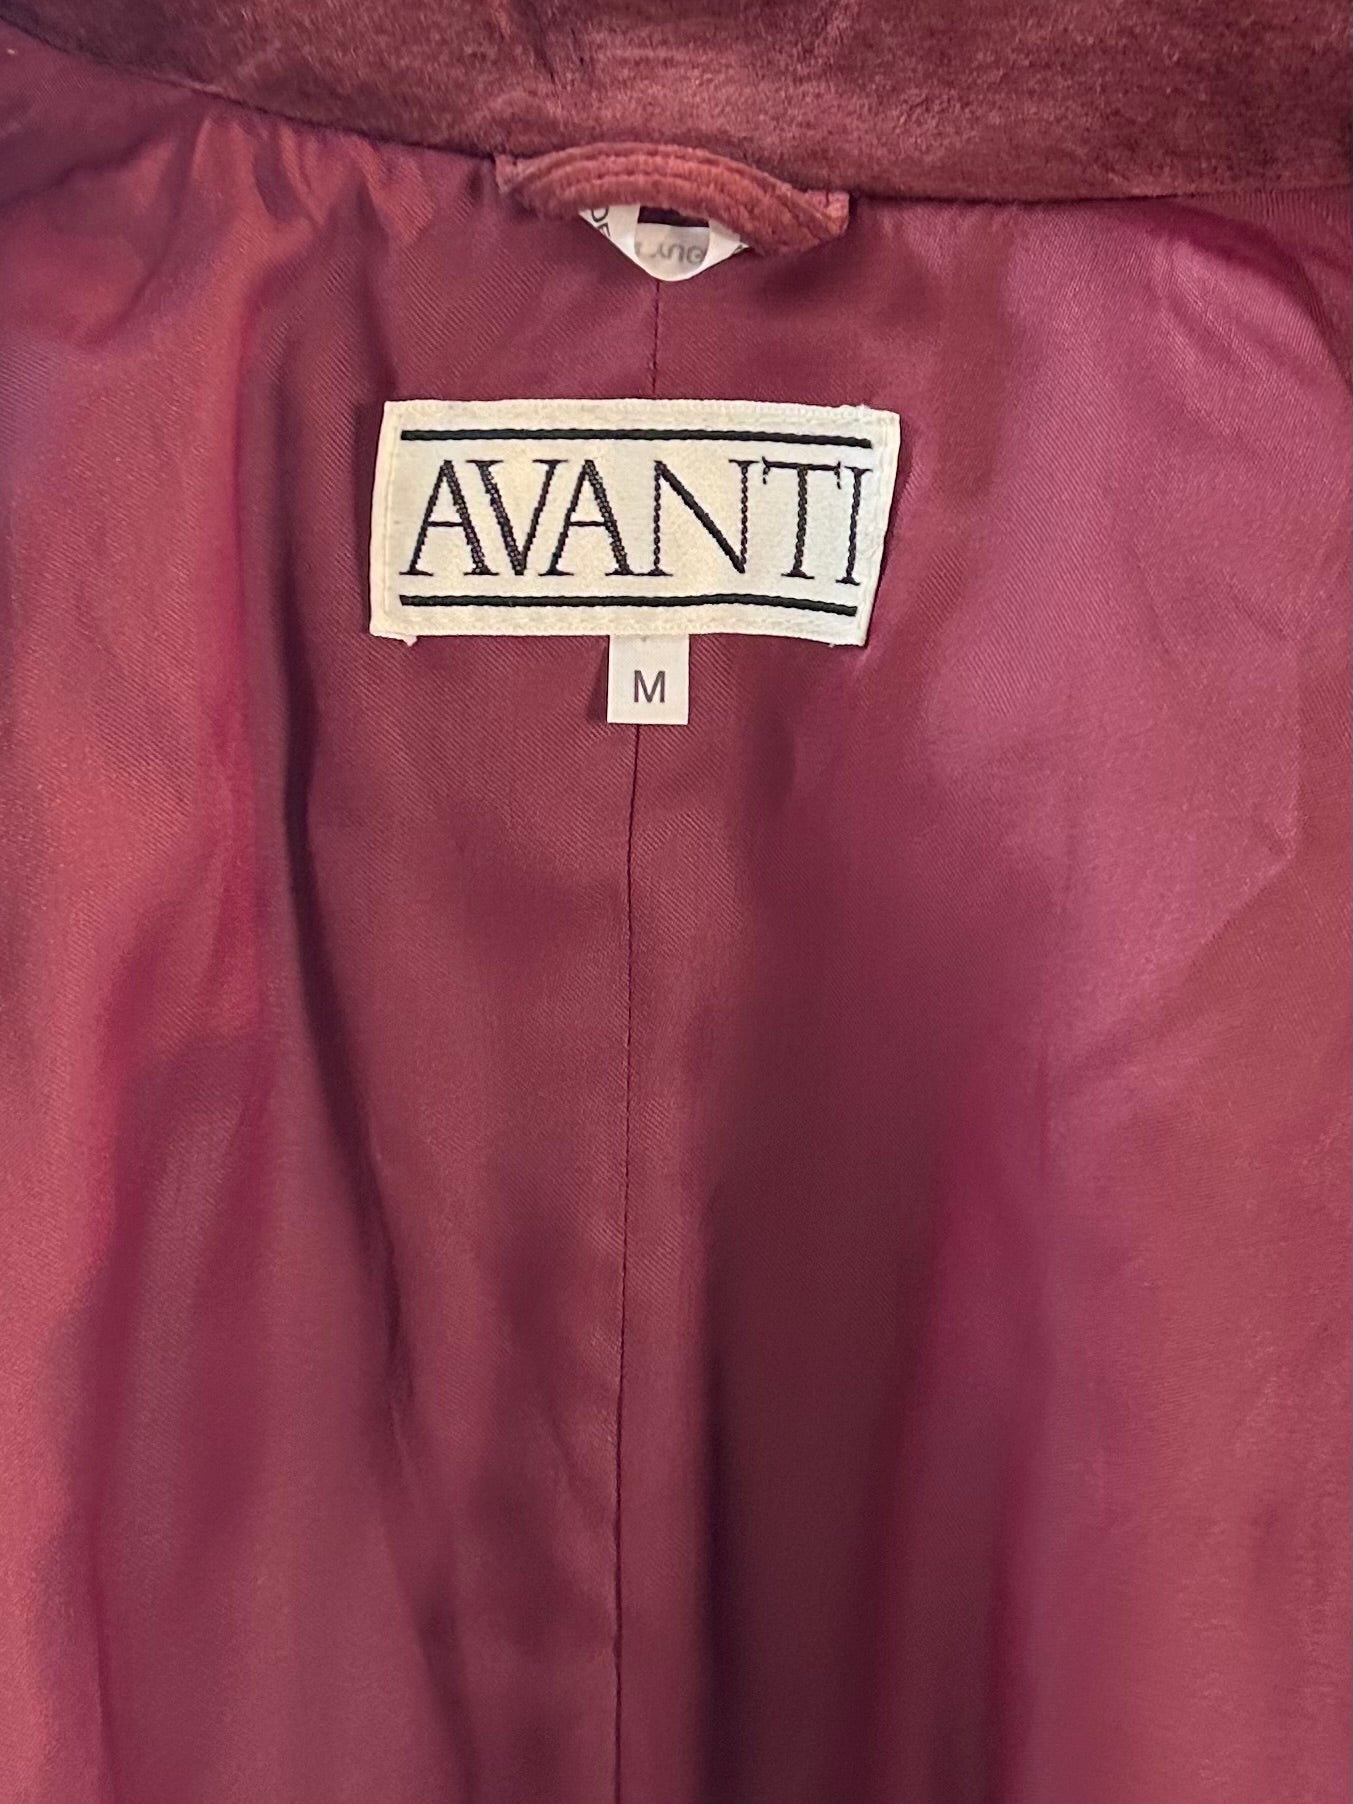 90s 'Avanti' Oversized Burgundy Suede Blazer Jacket / Medium